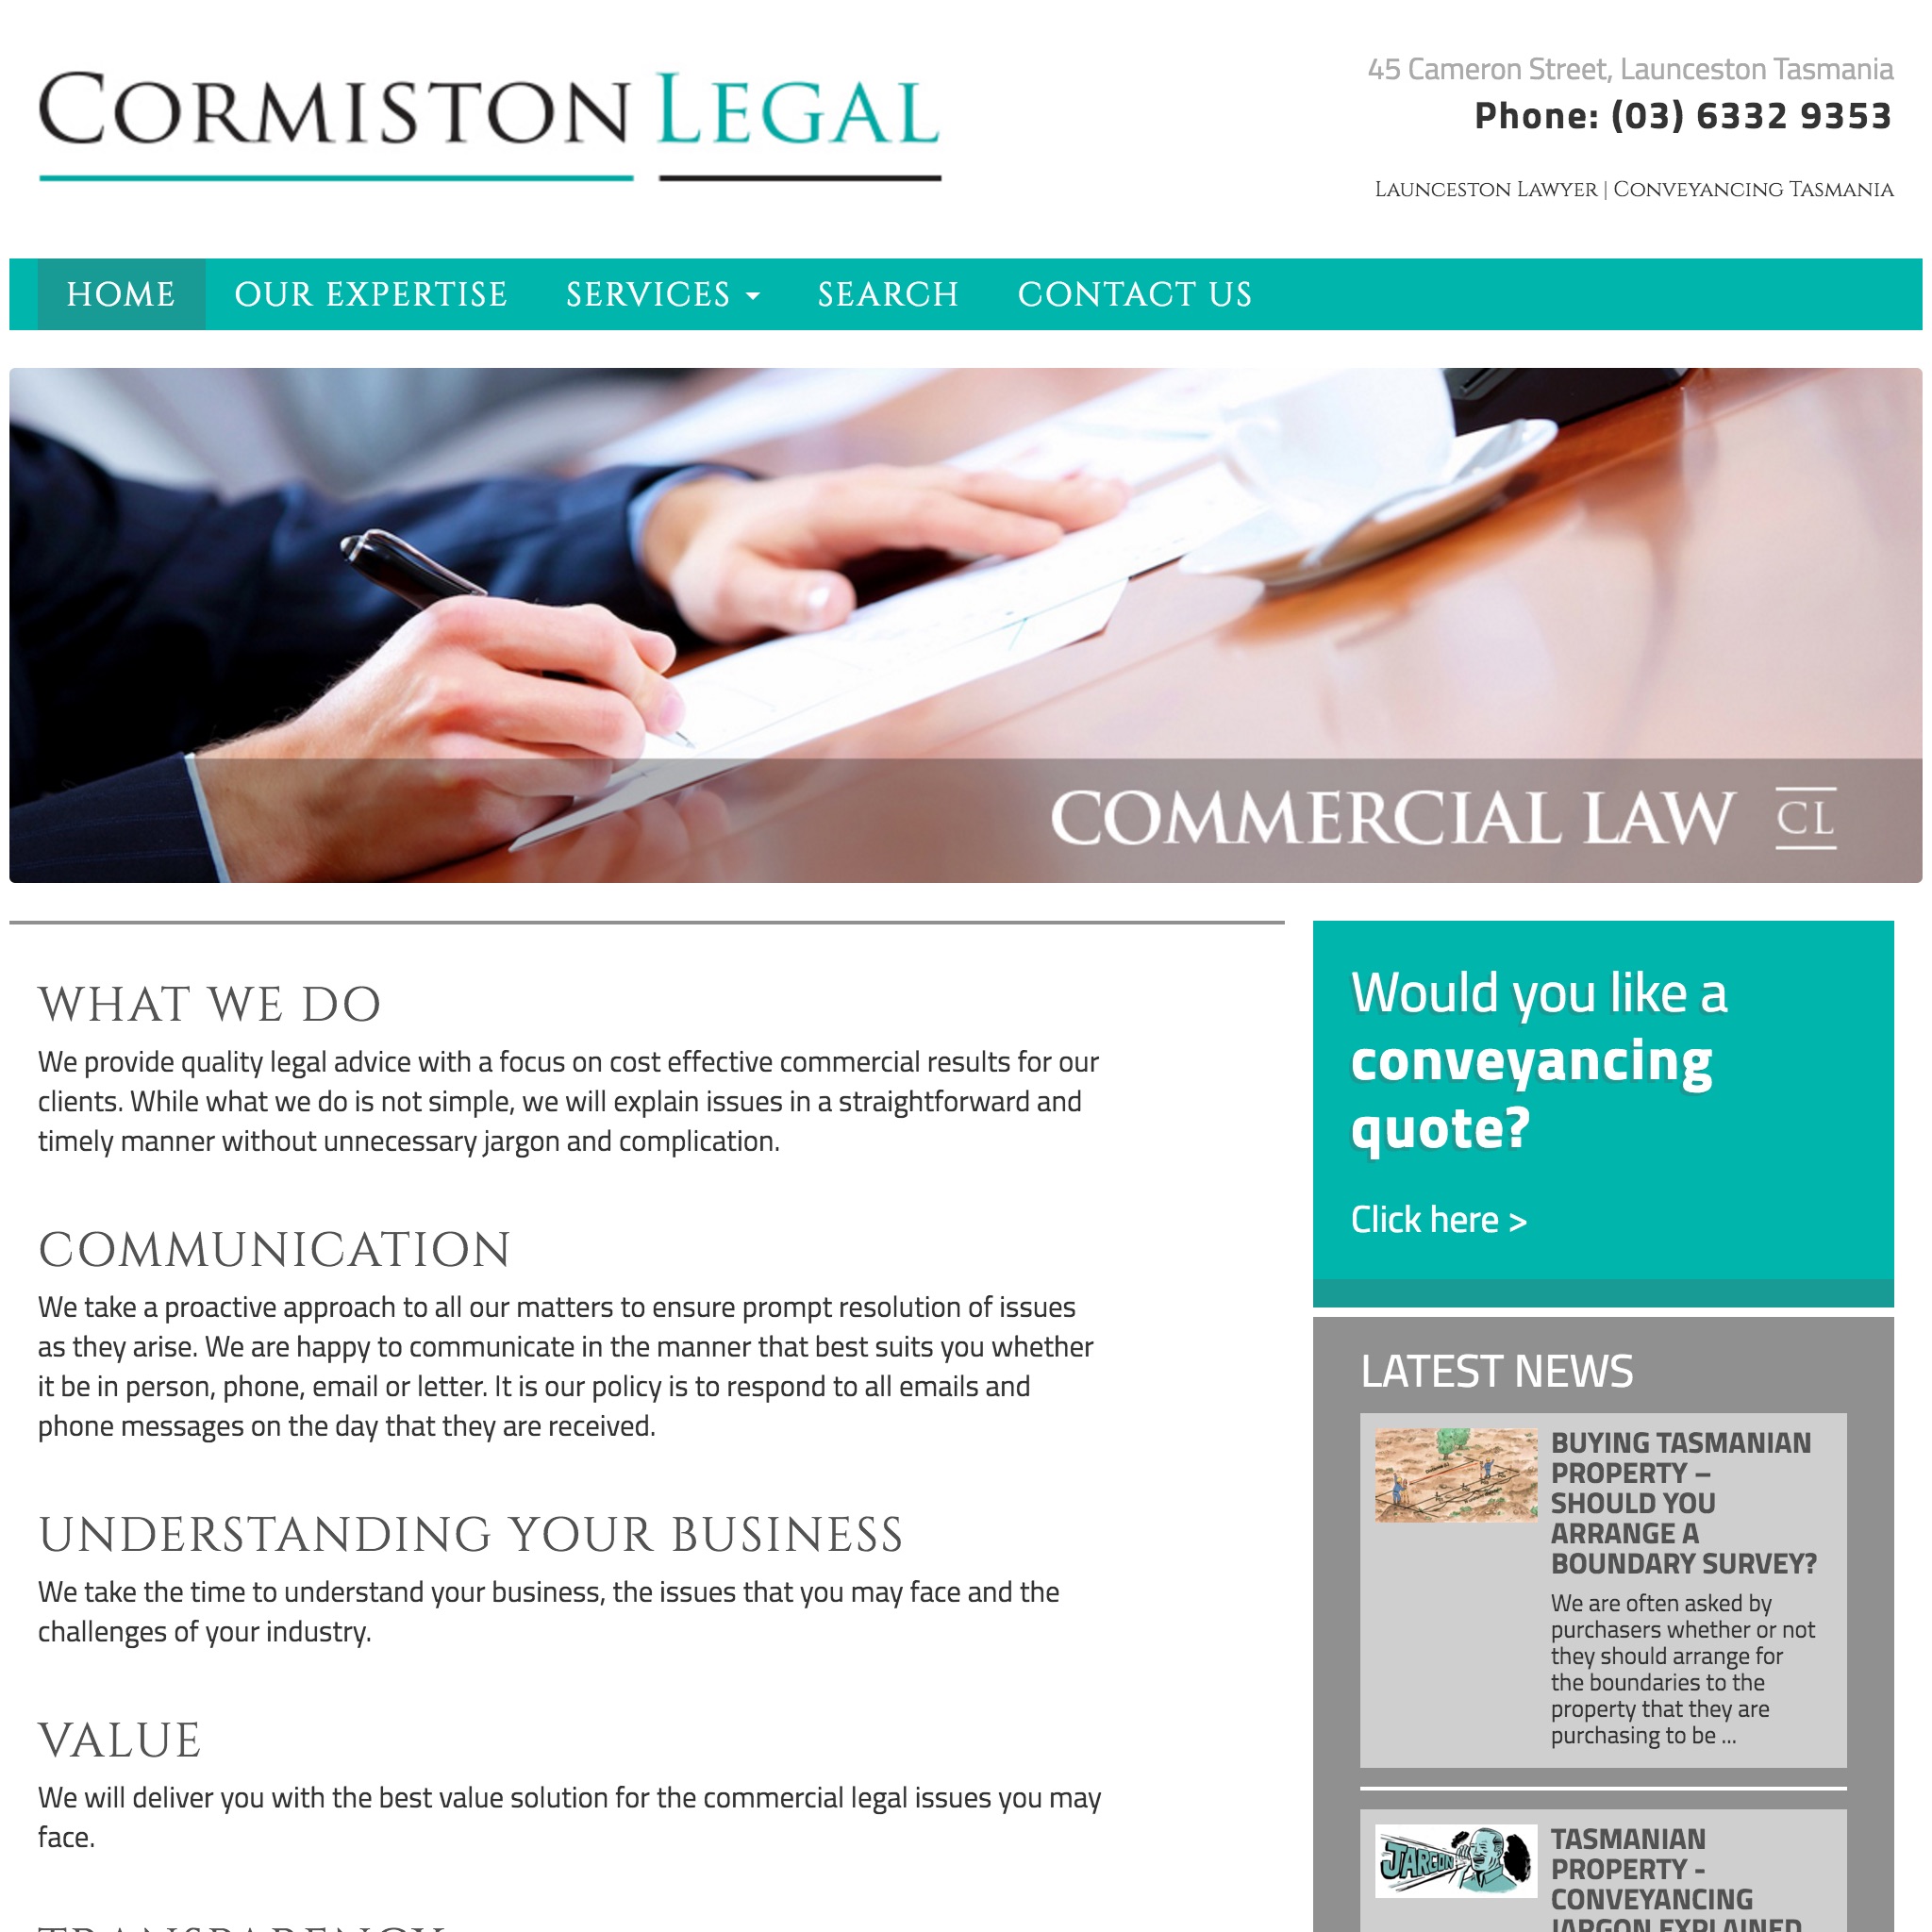 Cormiston Legal website